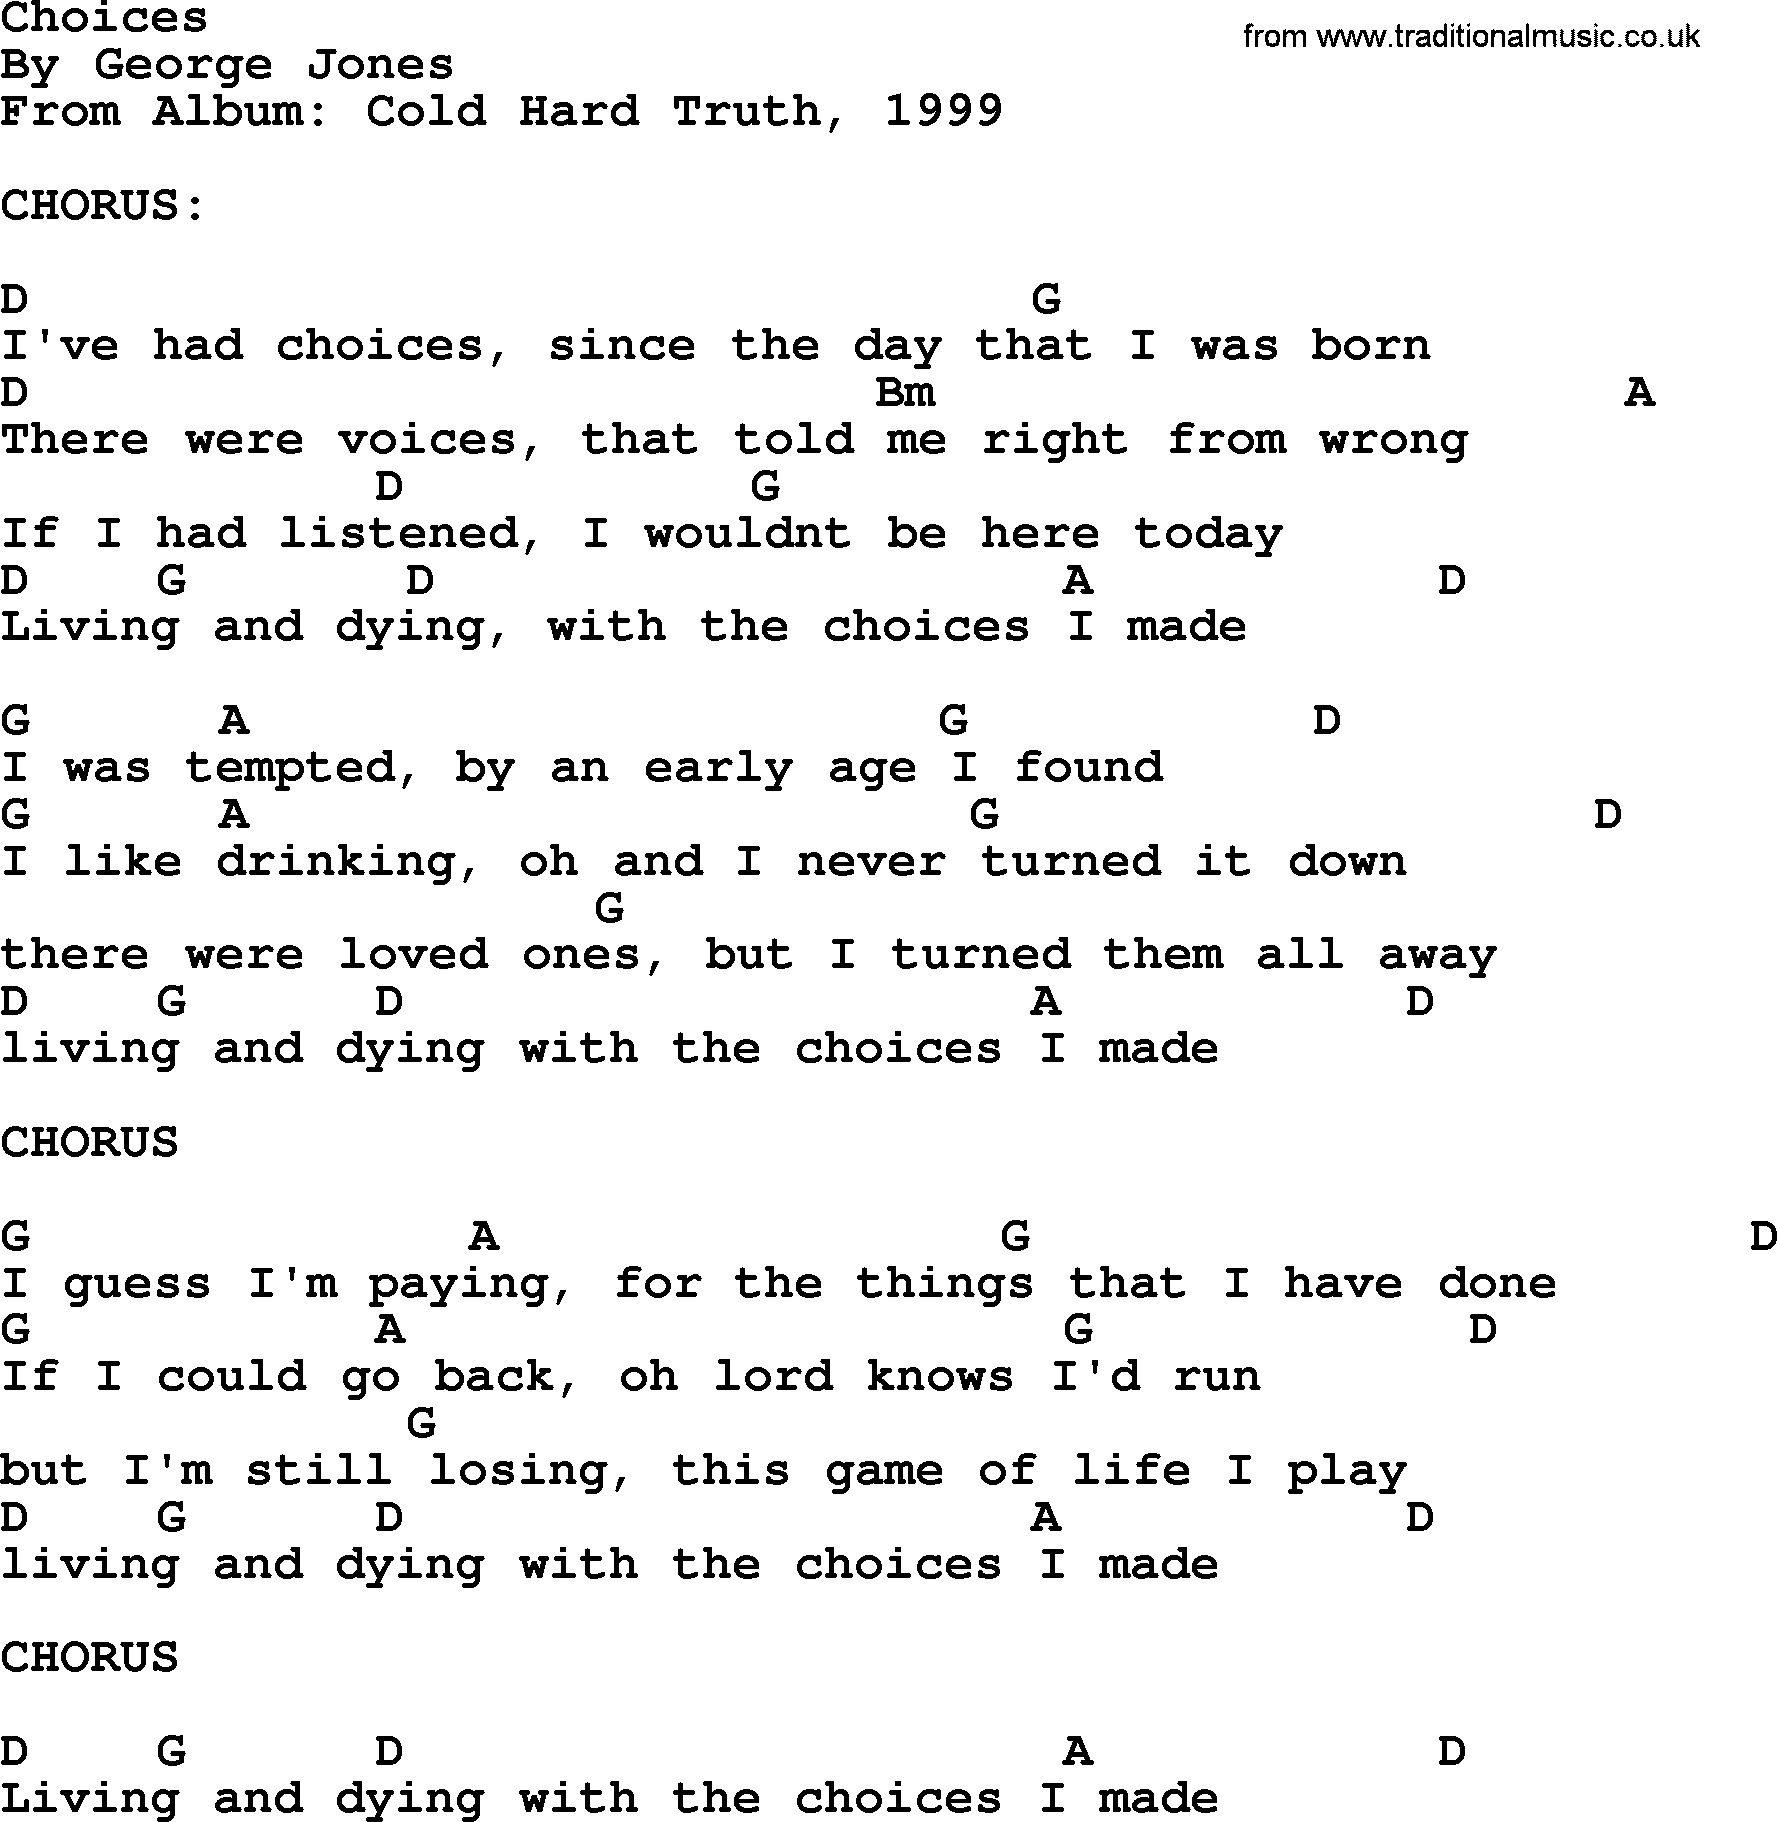 George Jones song: Choices, lyrics and chords